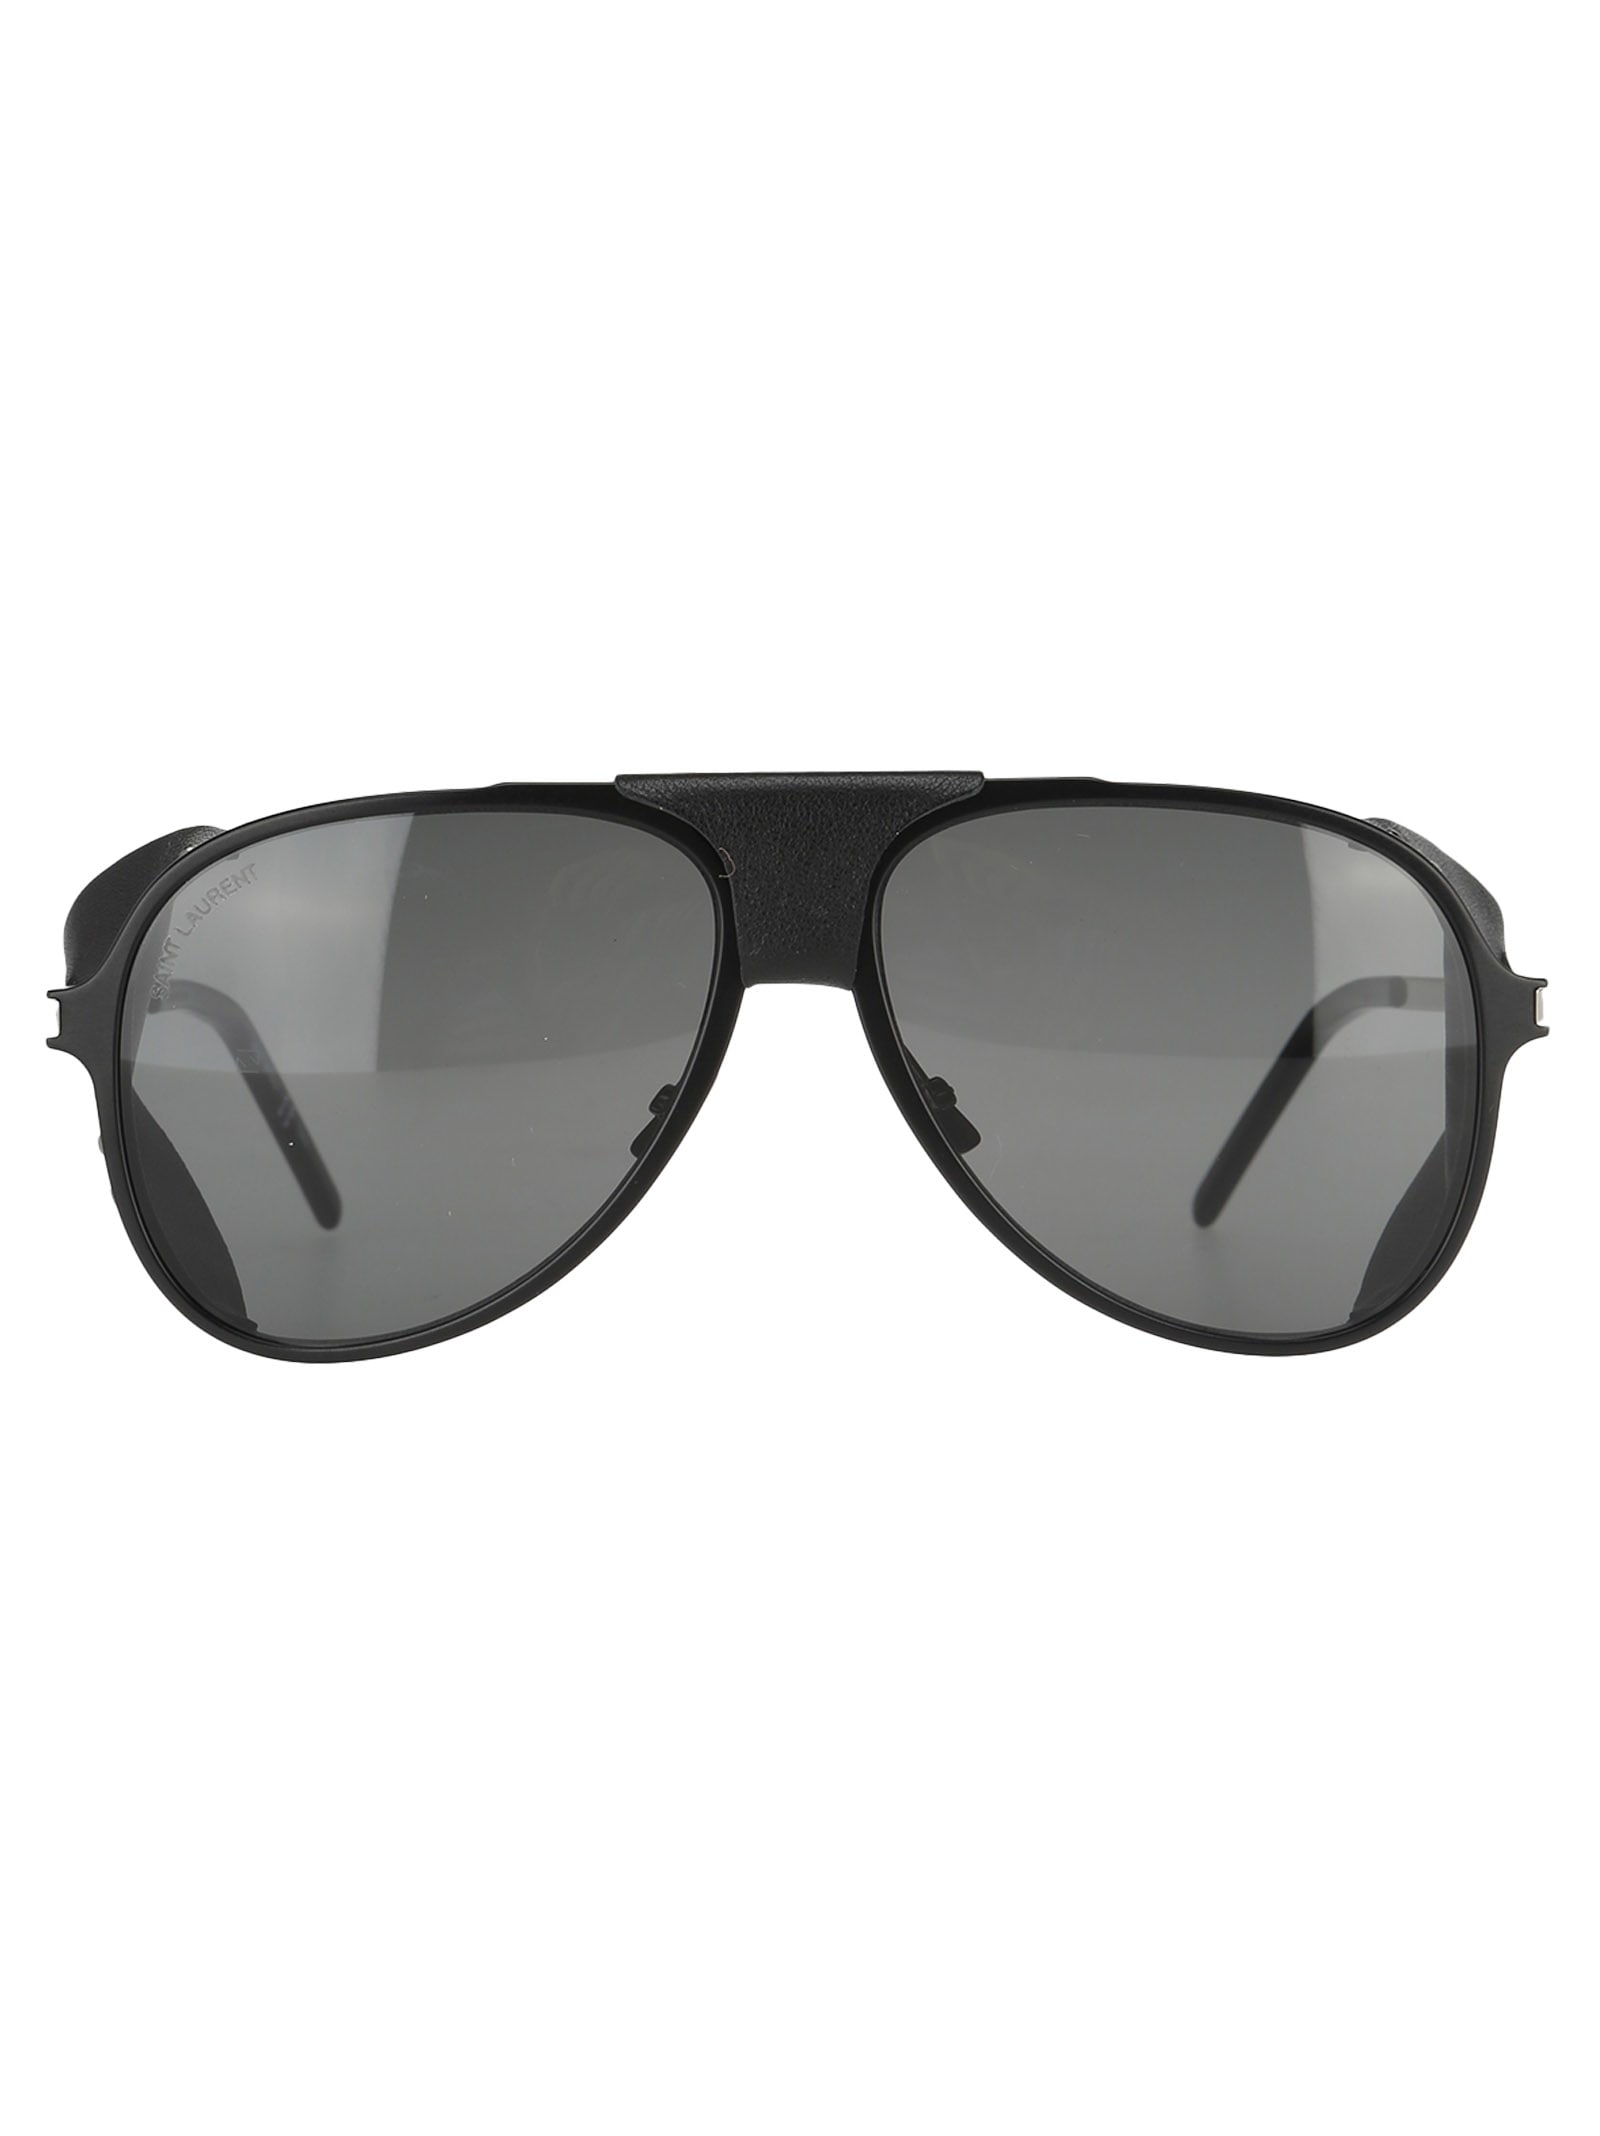 Saint Laurent Black Sunglasses Top Sellers, 59% OFF | www 